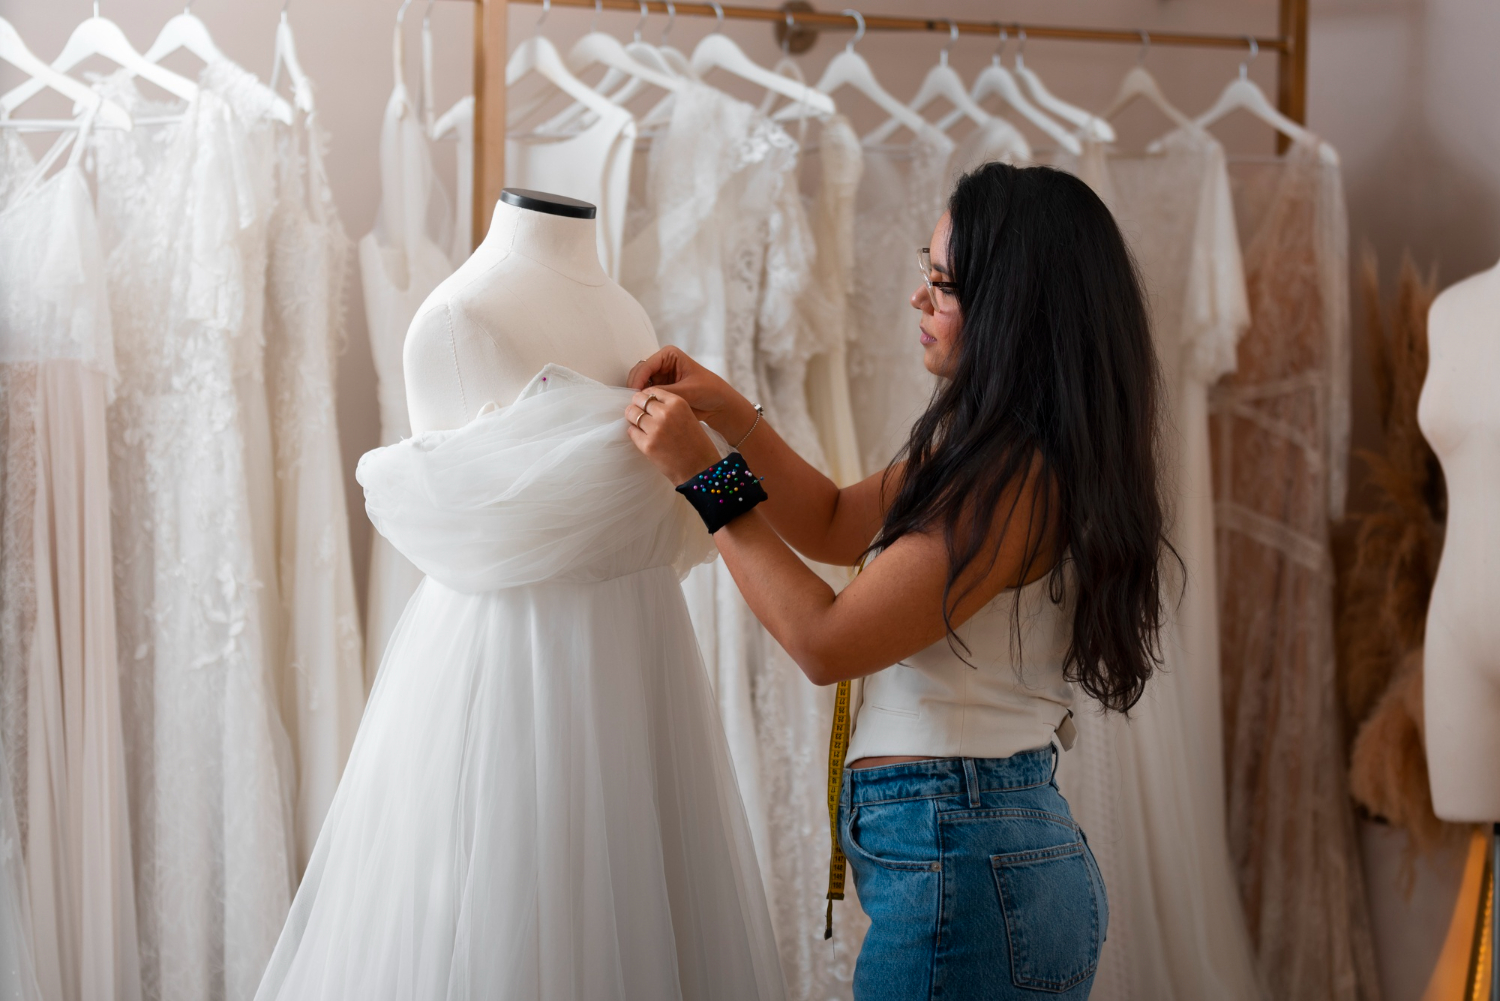  brazilian woman working as wedding clothing designer